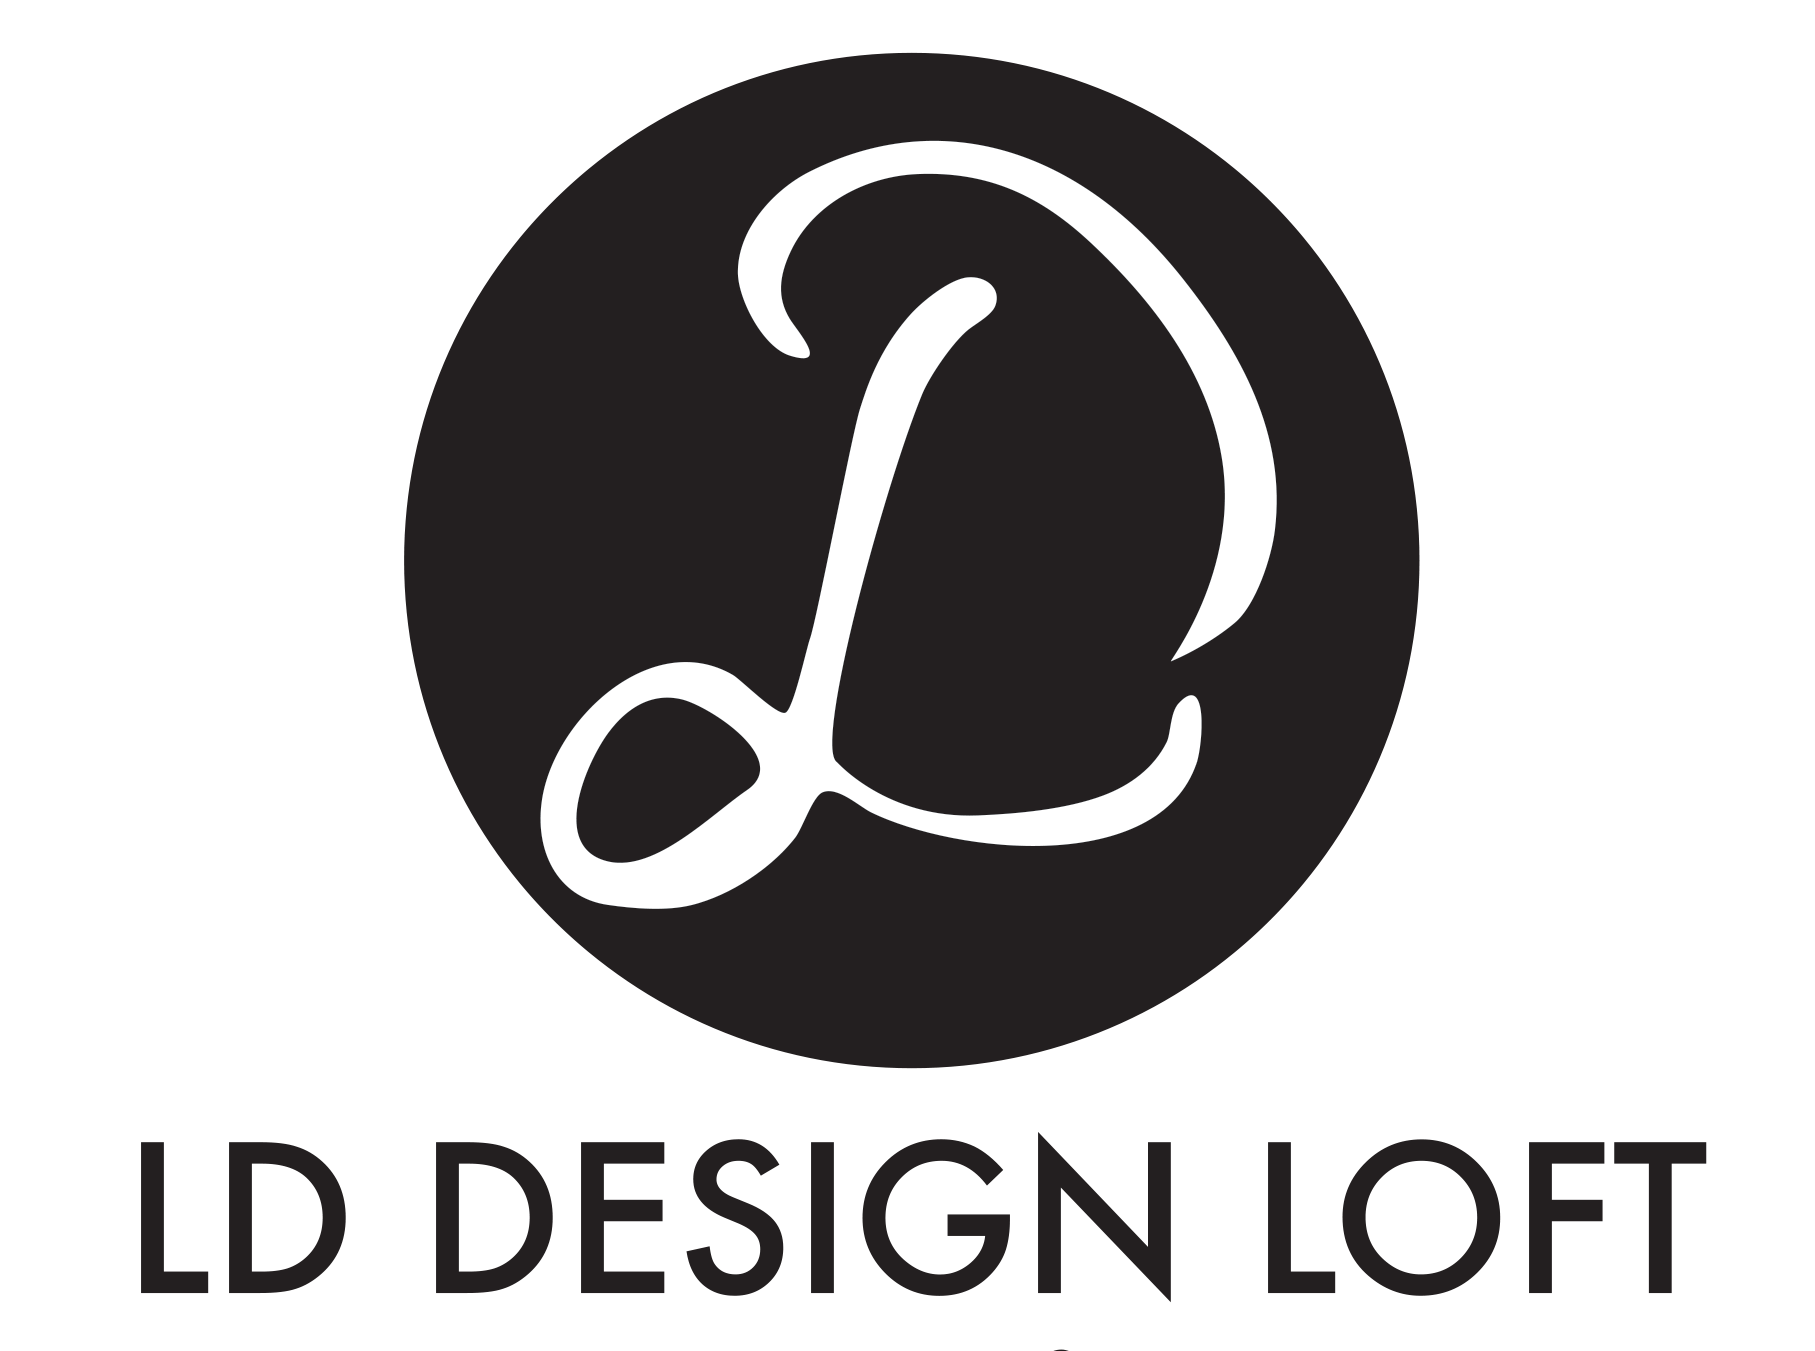 LD Logo - Home Page